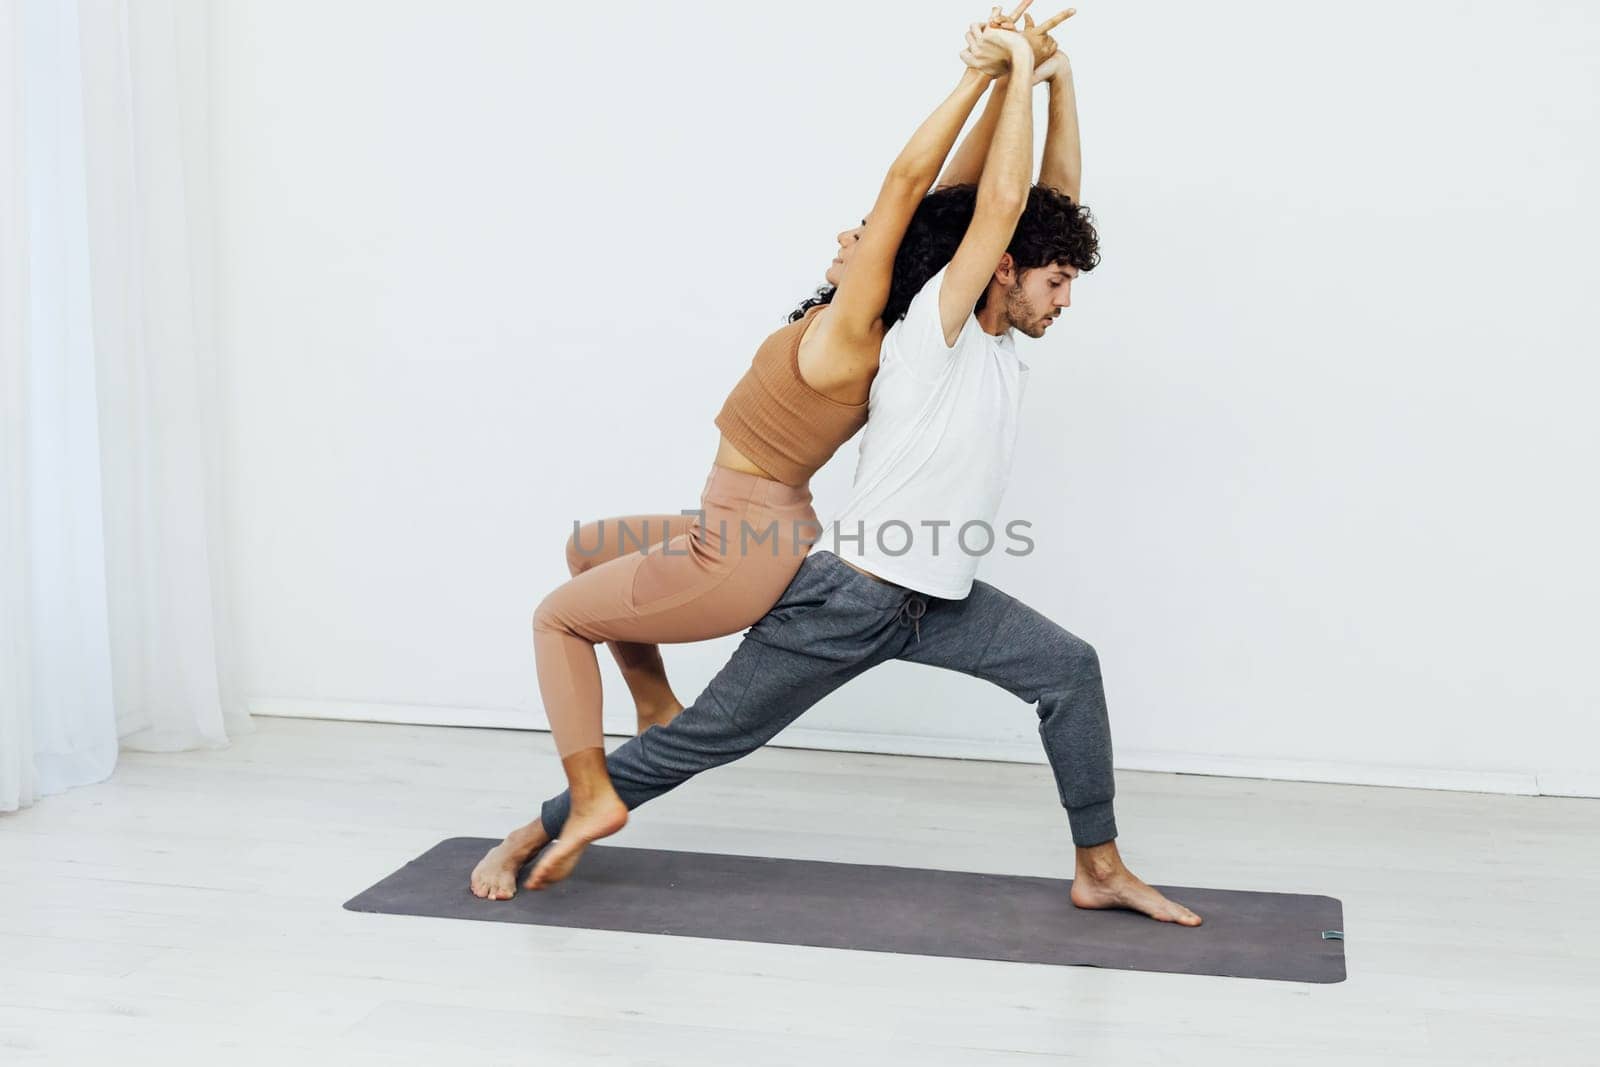 trainer yoga stretching body namaste practice acrobatics aerobics training in the gym